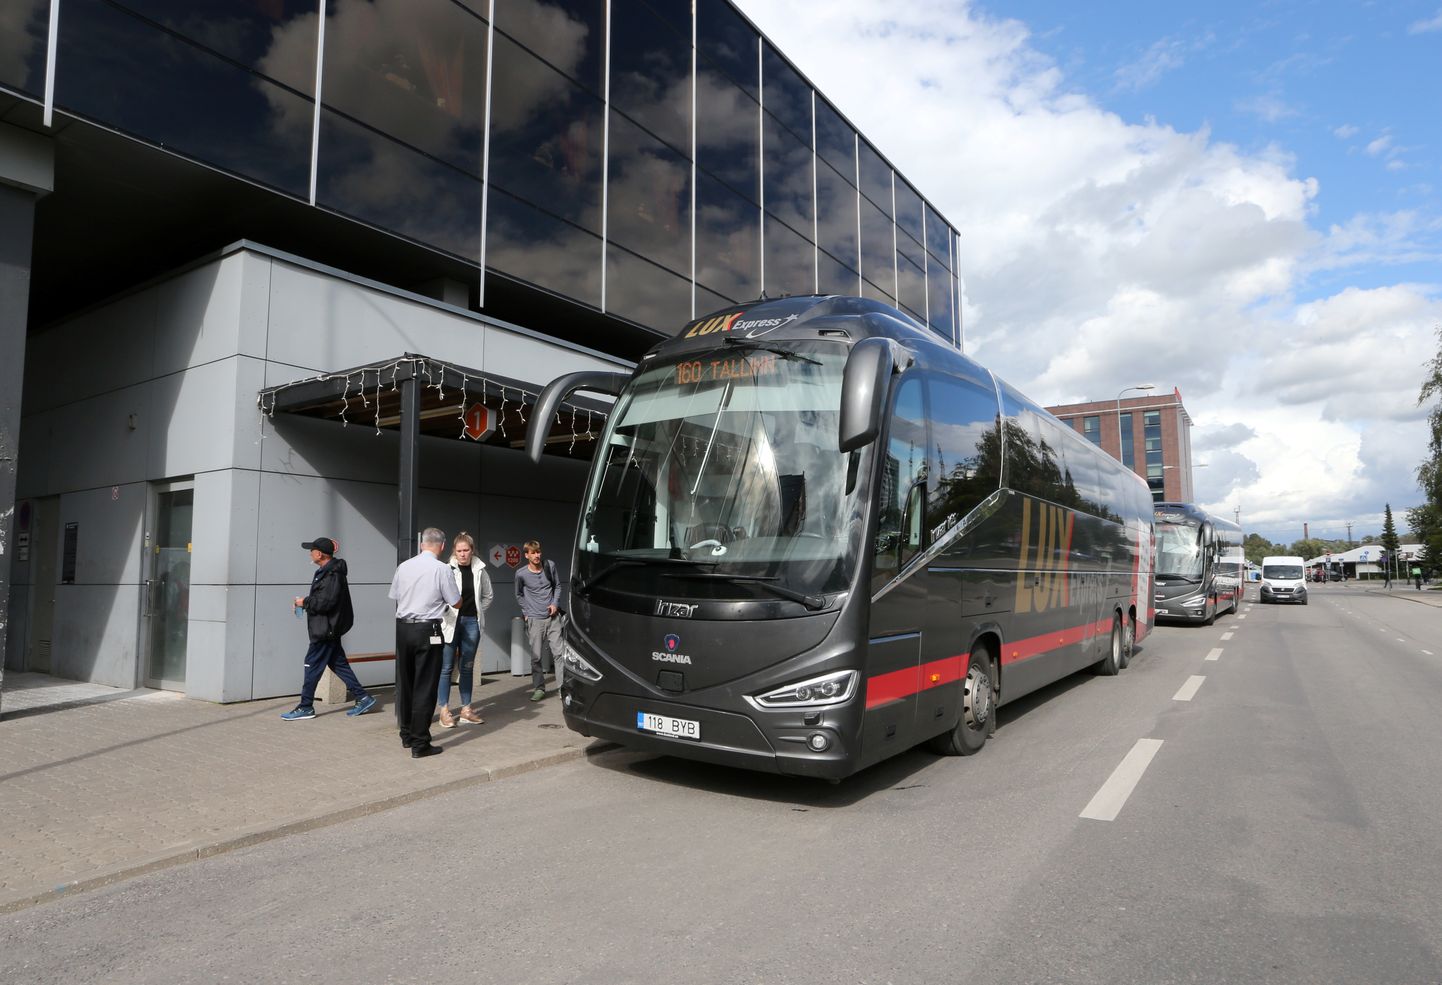 Автобус Lux Express.